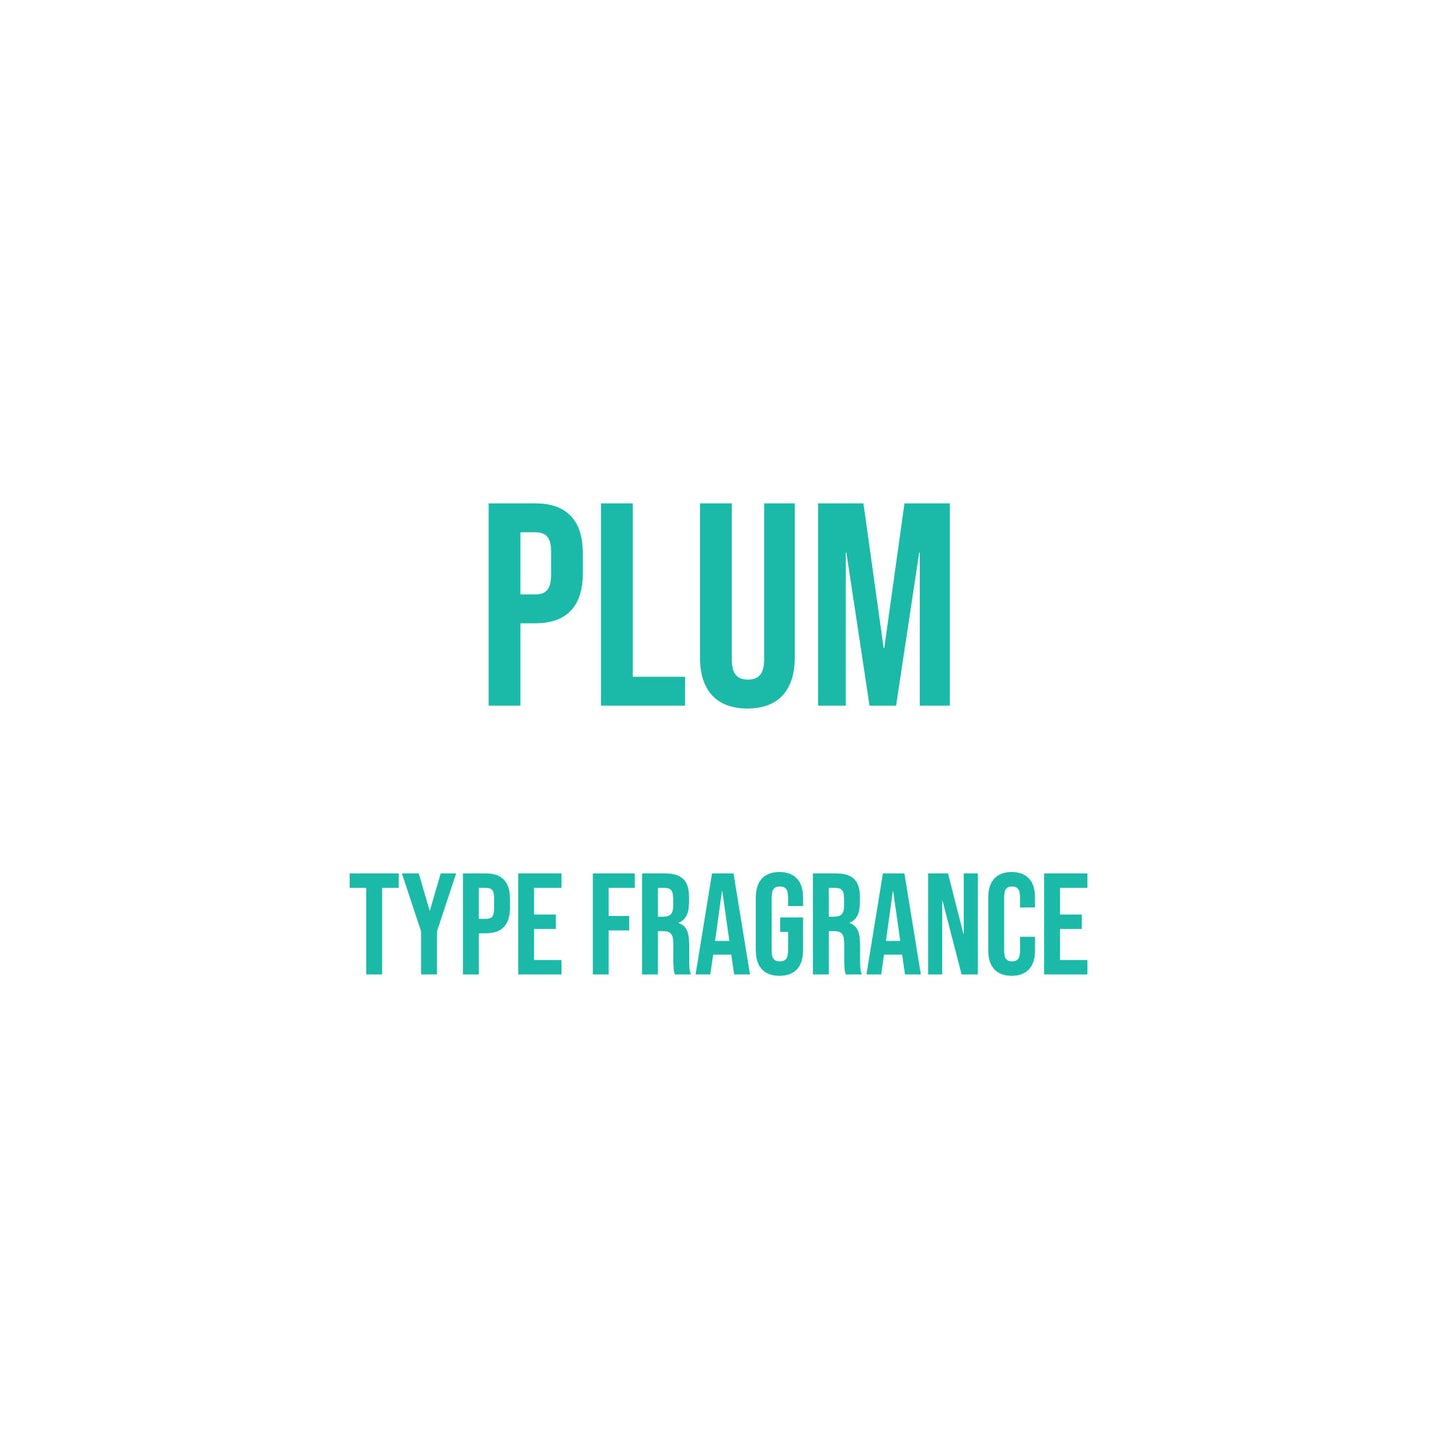 Plum Type Fragrance